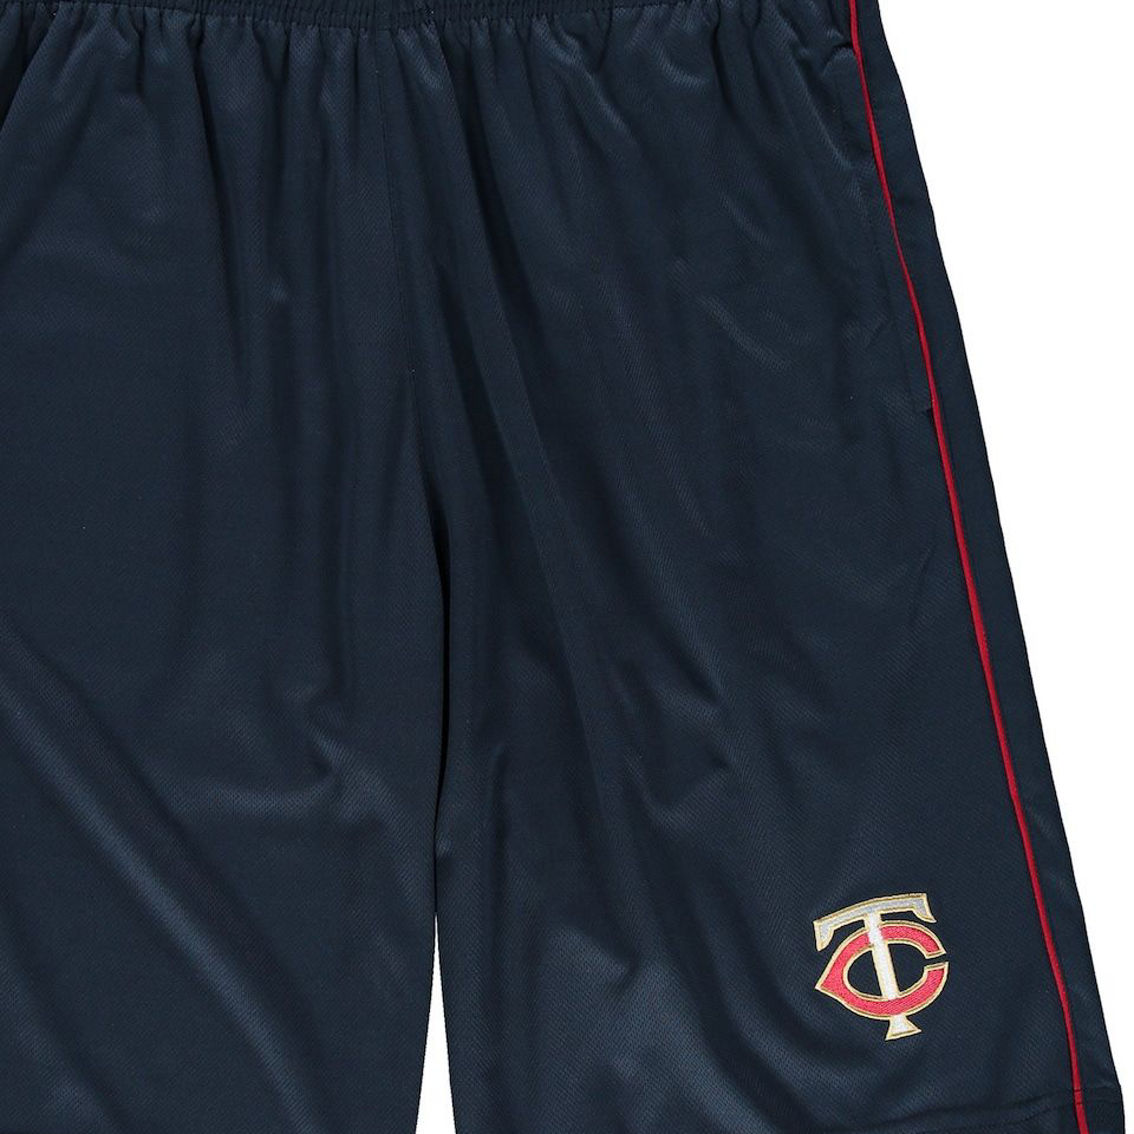 Fanatics Branded Men's Navy Minnesota Twins Big & Tall Mesh Shorts - Image 2 of 3